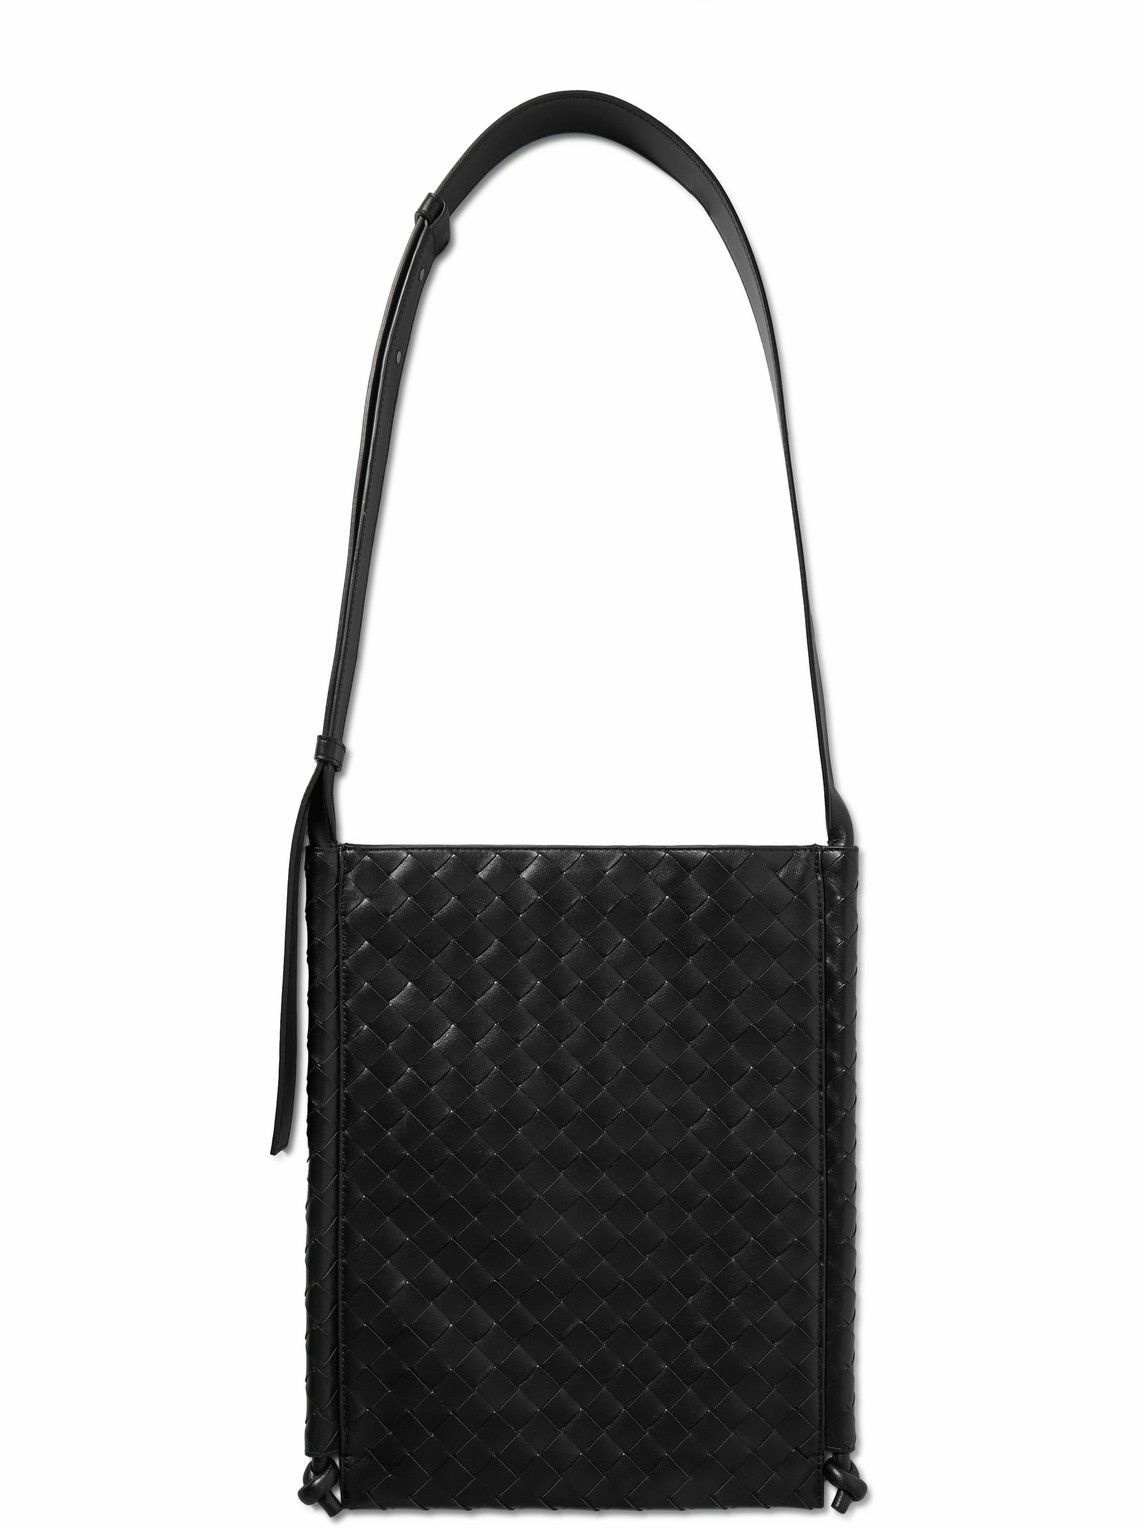 Bottega Veneta - Intrecciato Leather Messenger Bag Bottega Veneta